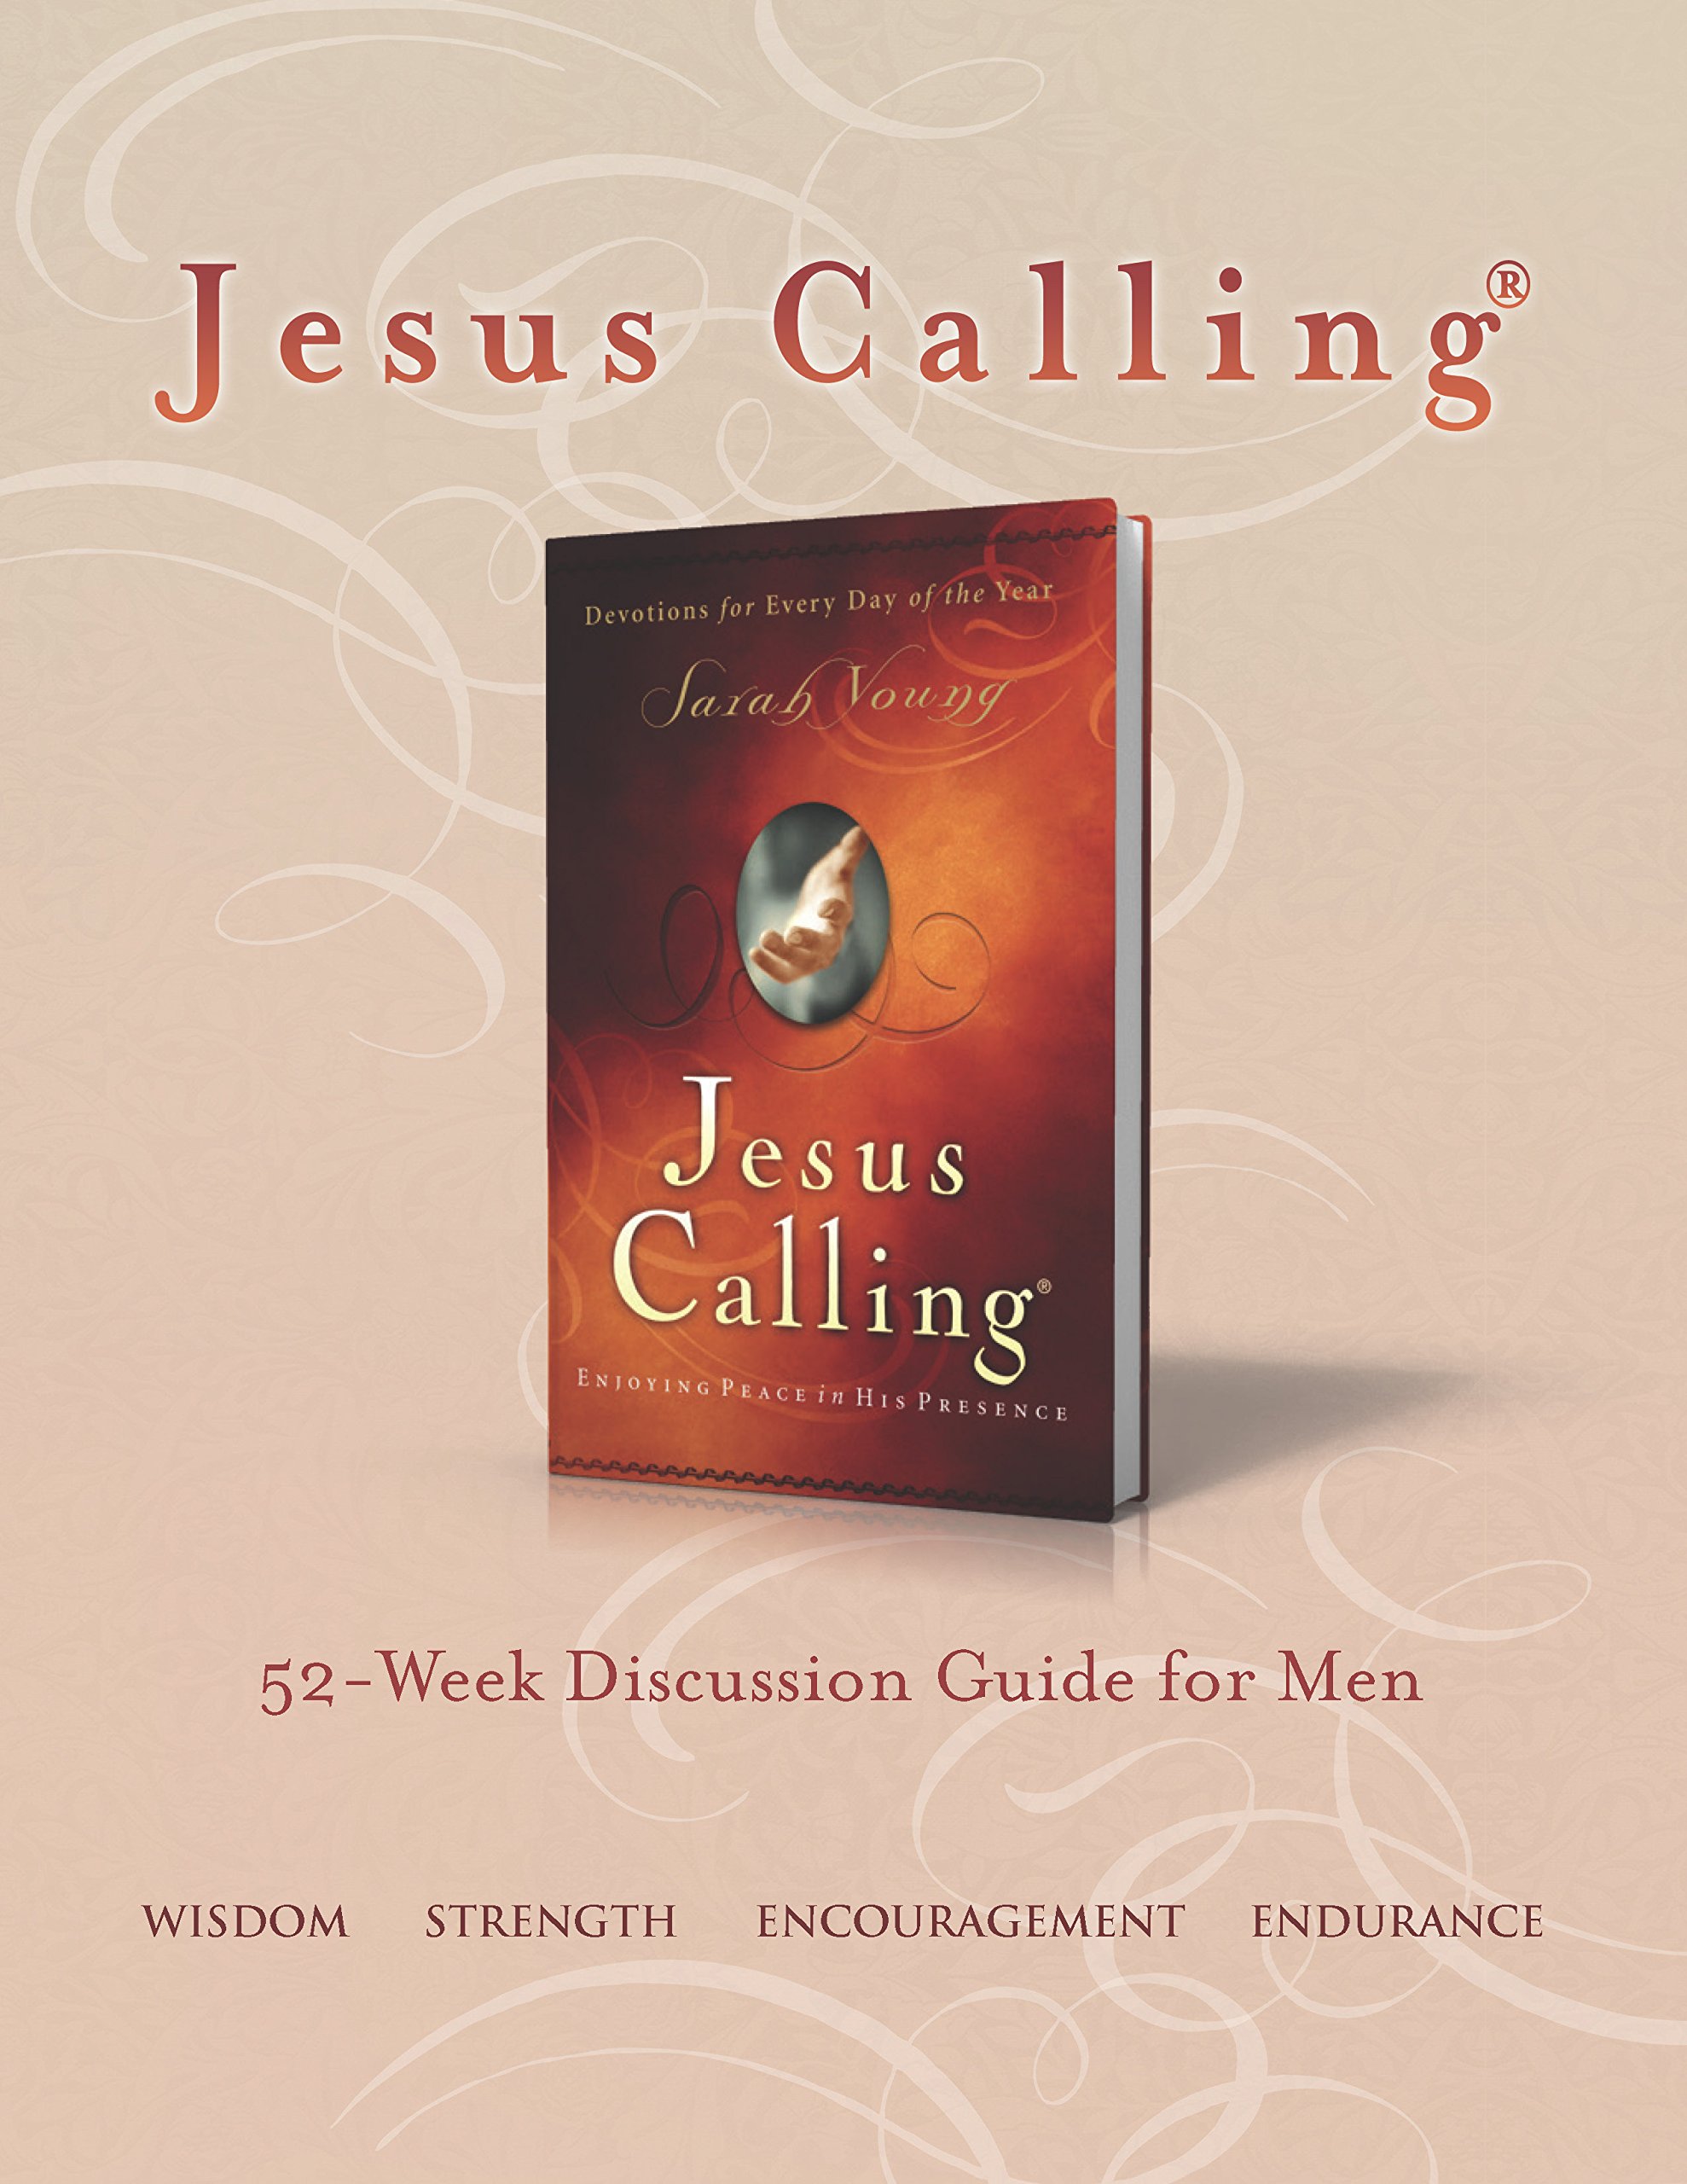 Jesus Calling Book Club Discussion Guide for Men (Jesus Calling®)